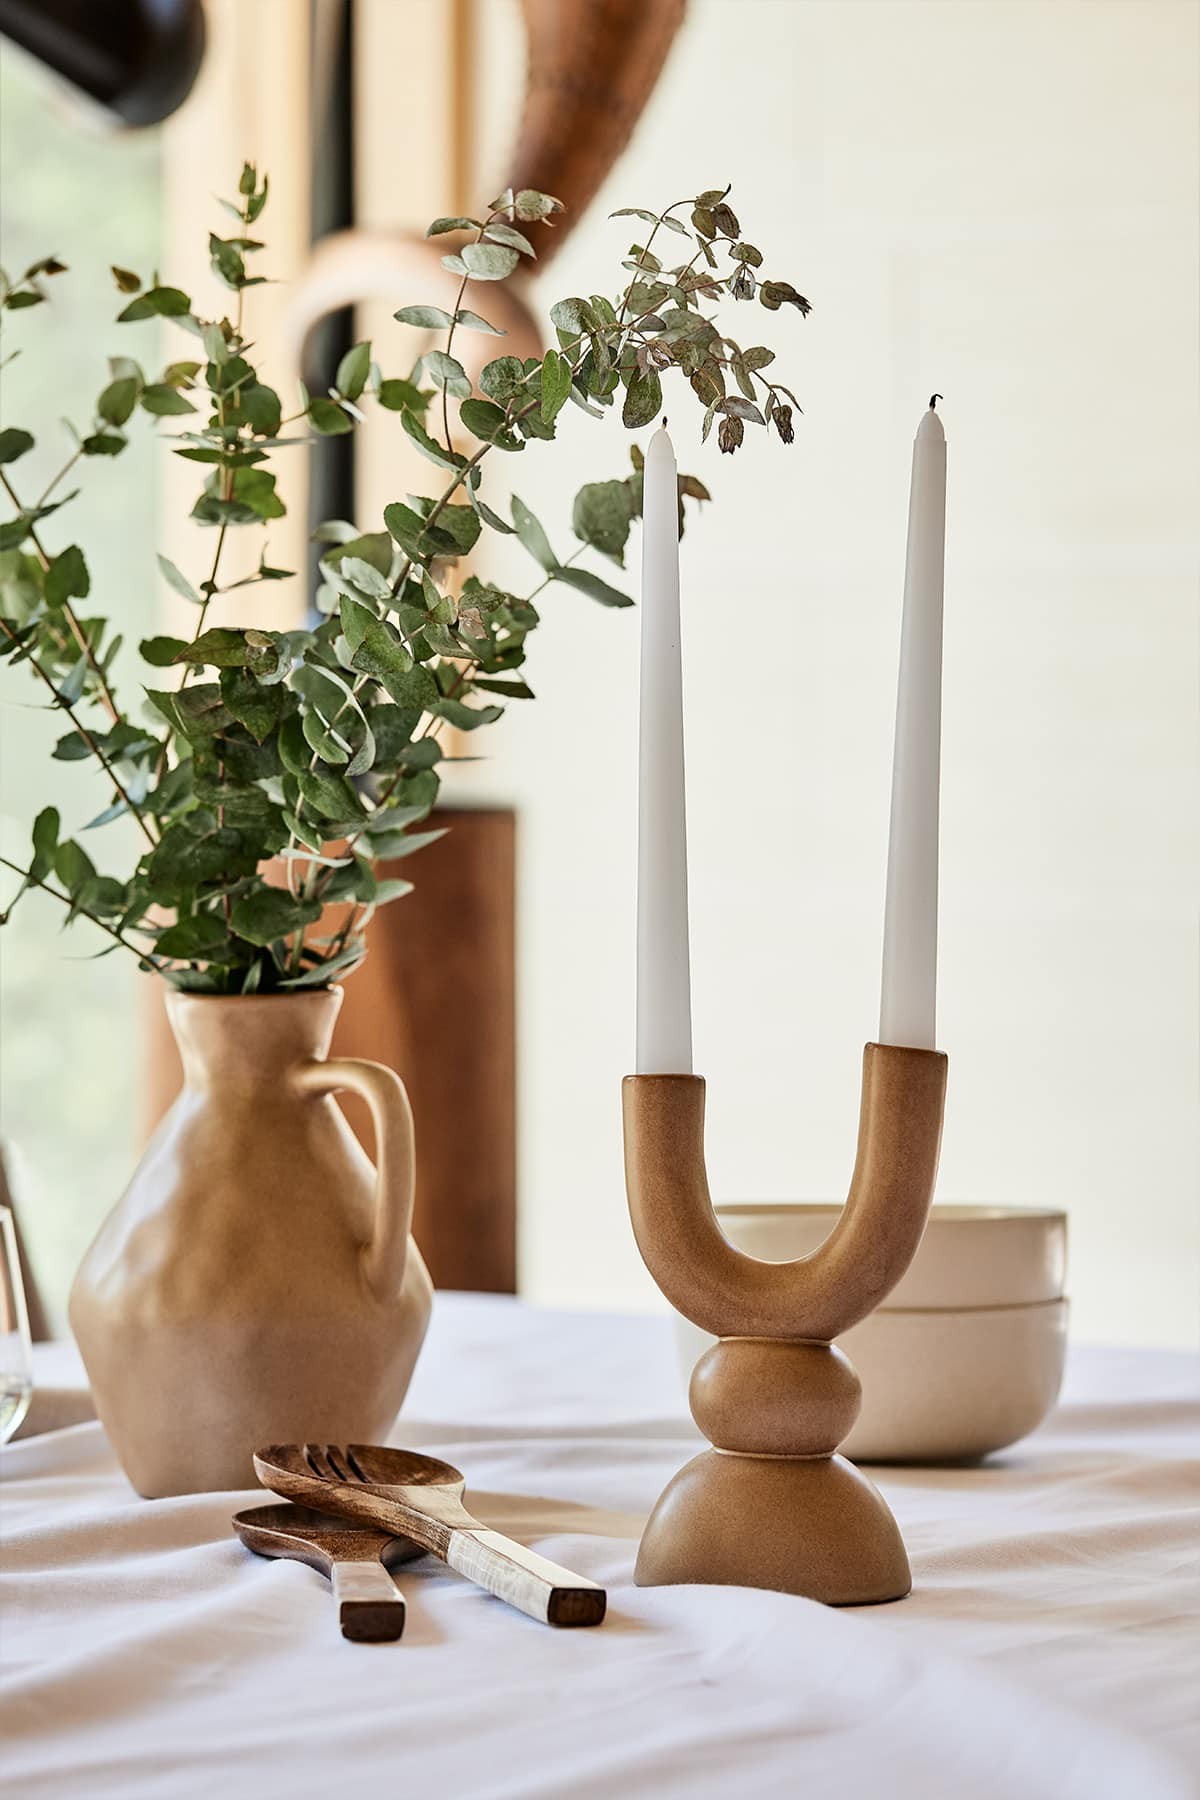 madras link double timber candle stick holder designer candle holder on table